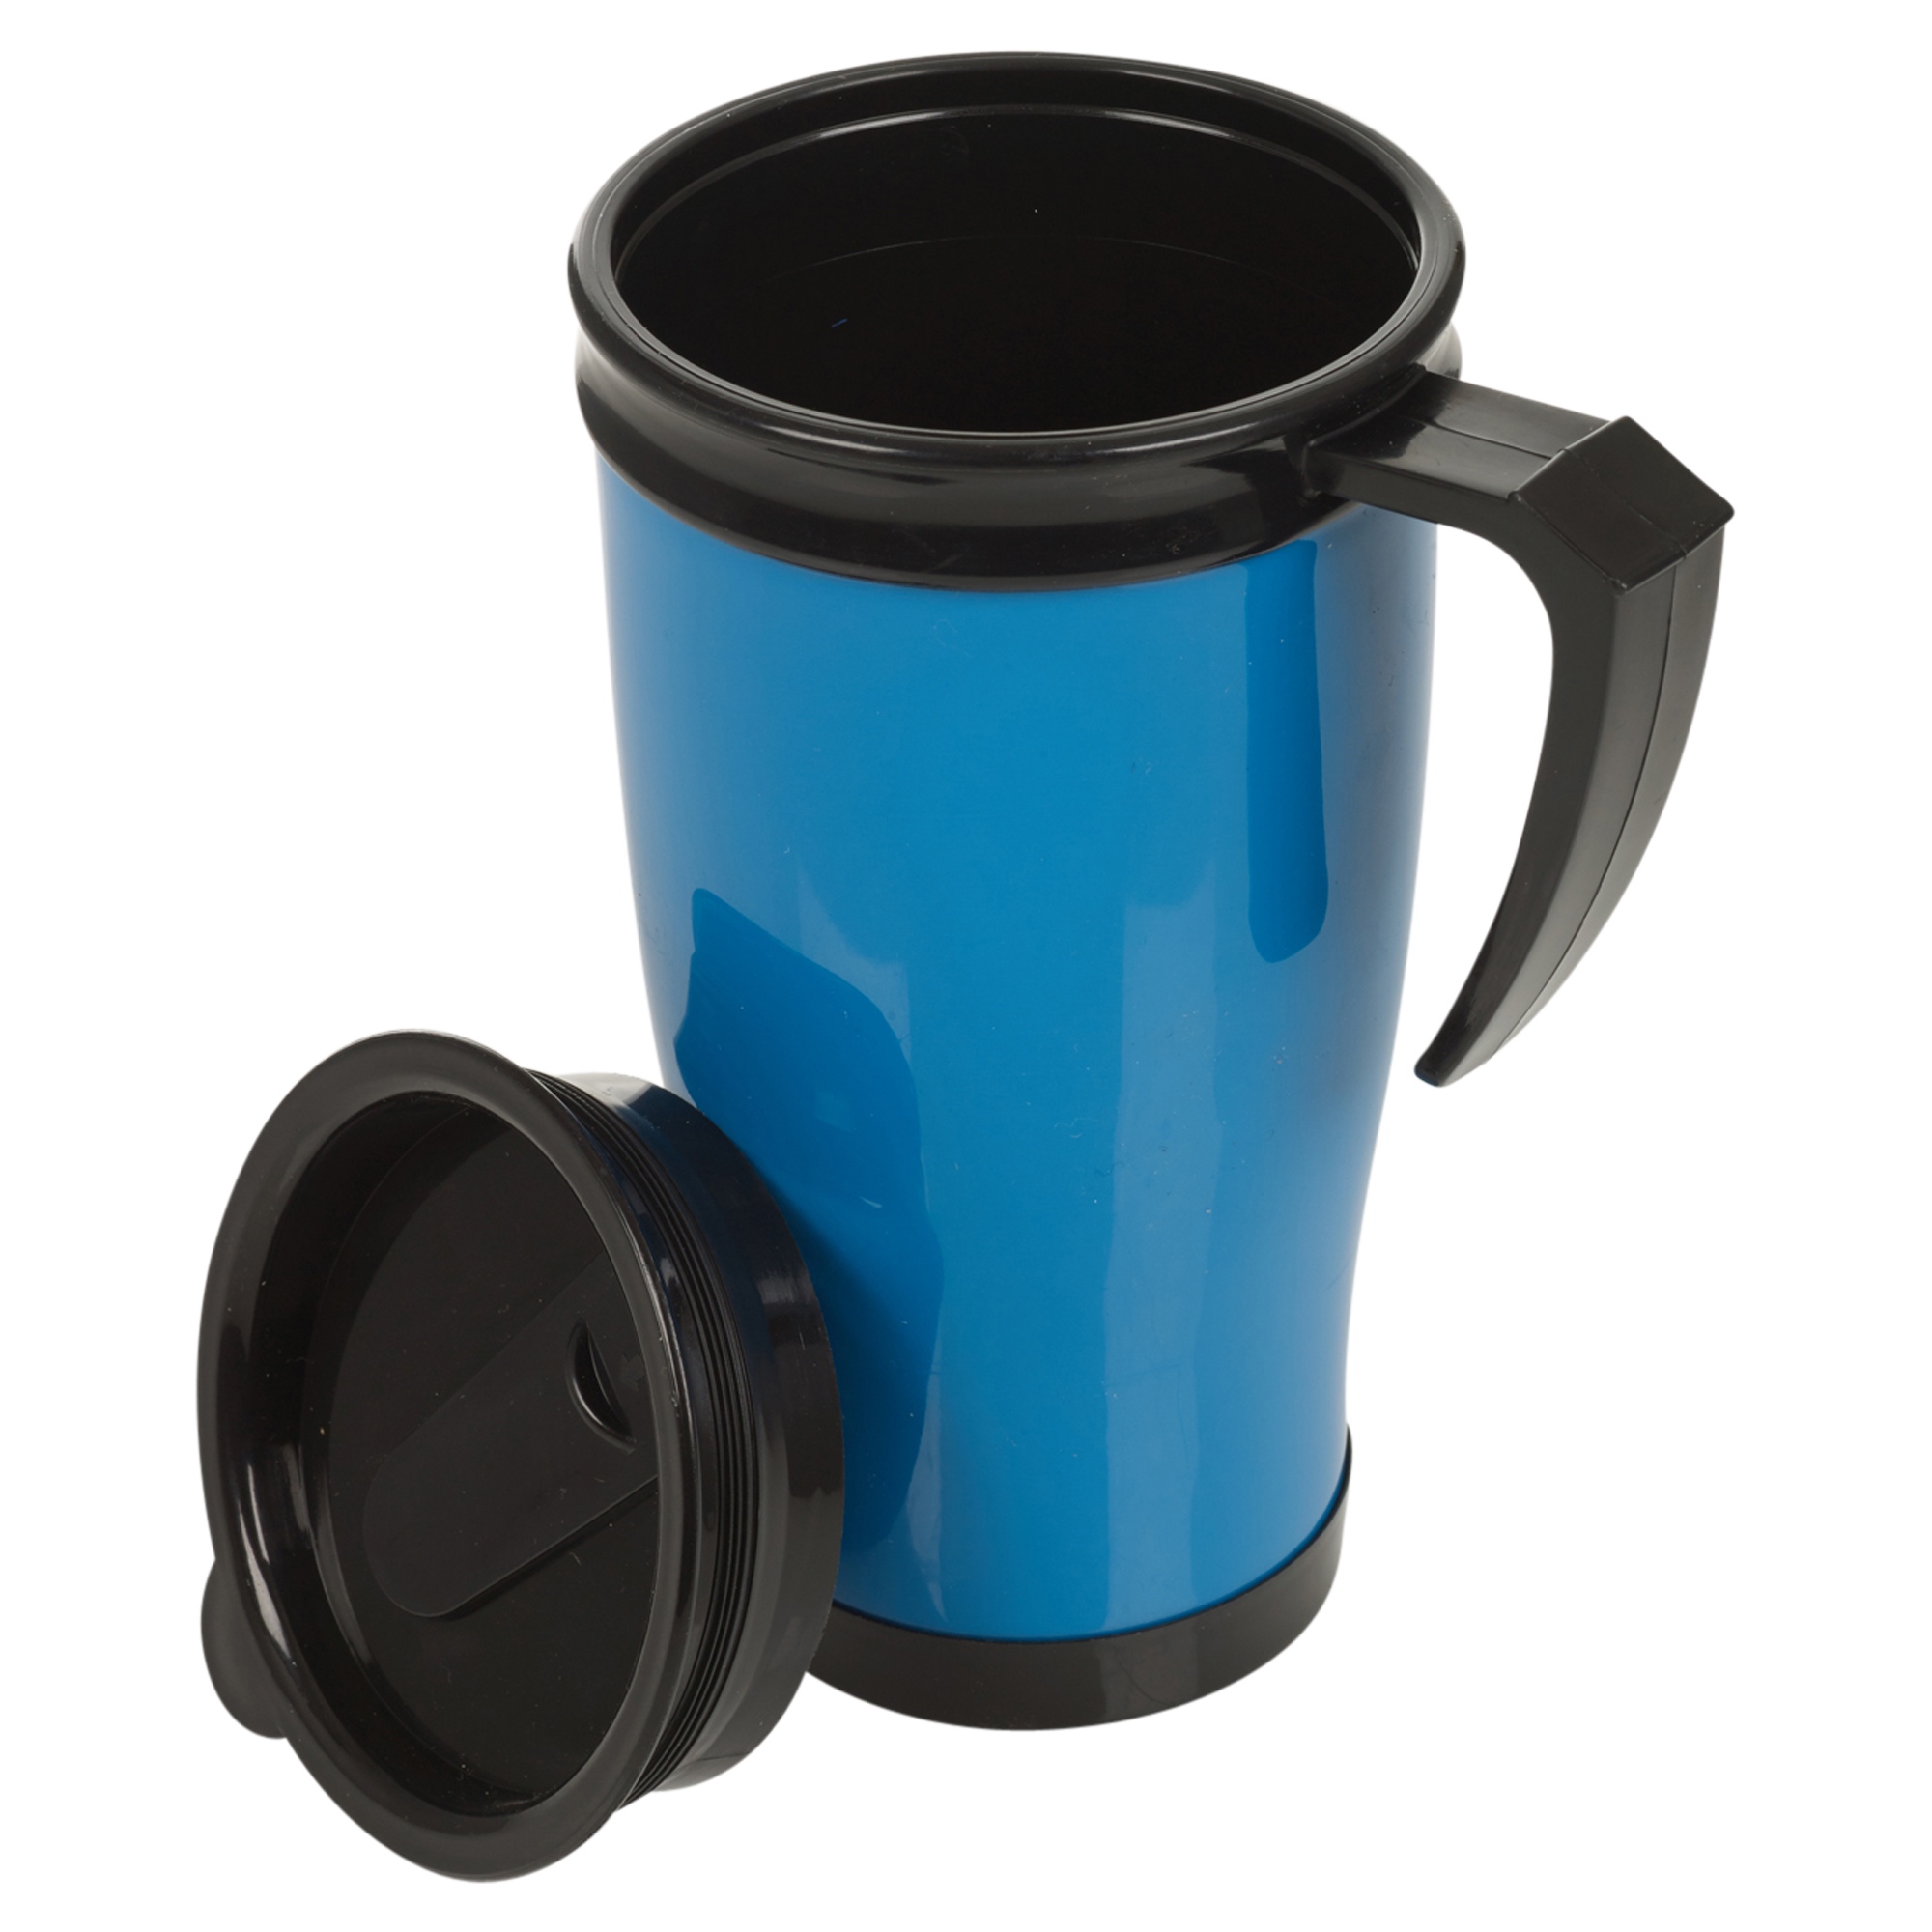 Insulated Travel Coffee Mugs Uk Tazza 450ml Thermal Mug Coffee Tea Travel Cup Screw On Lid